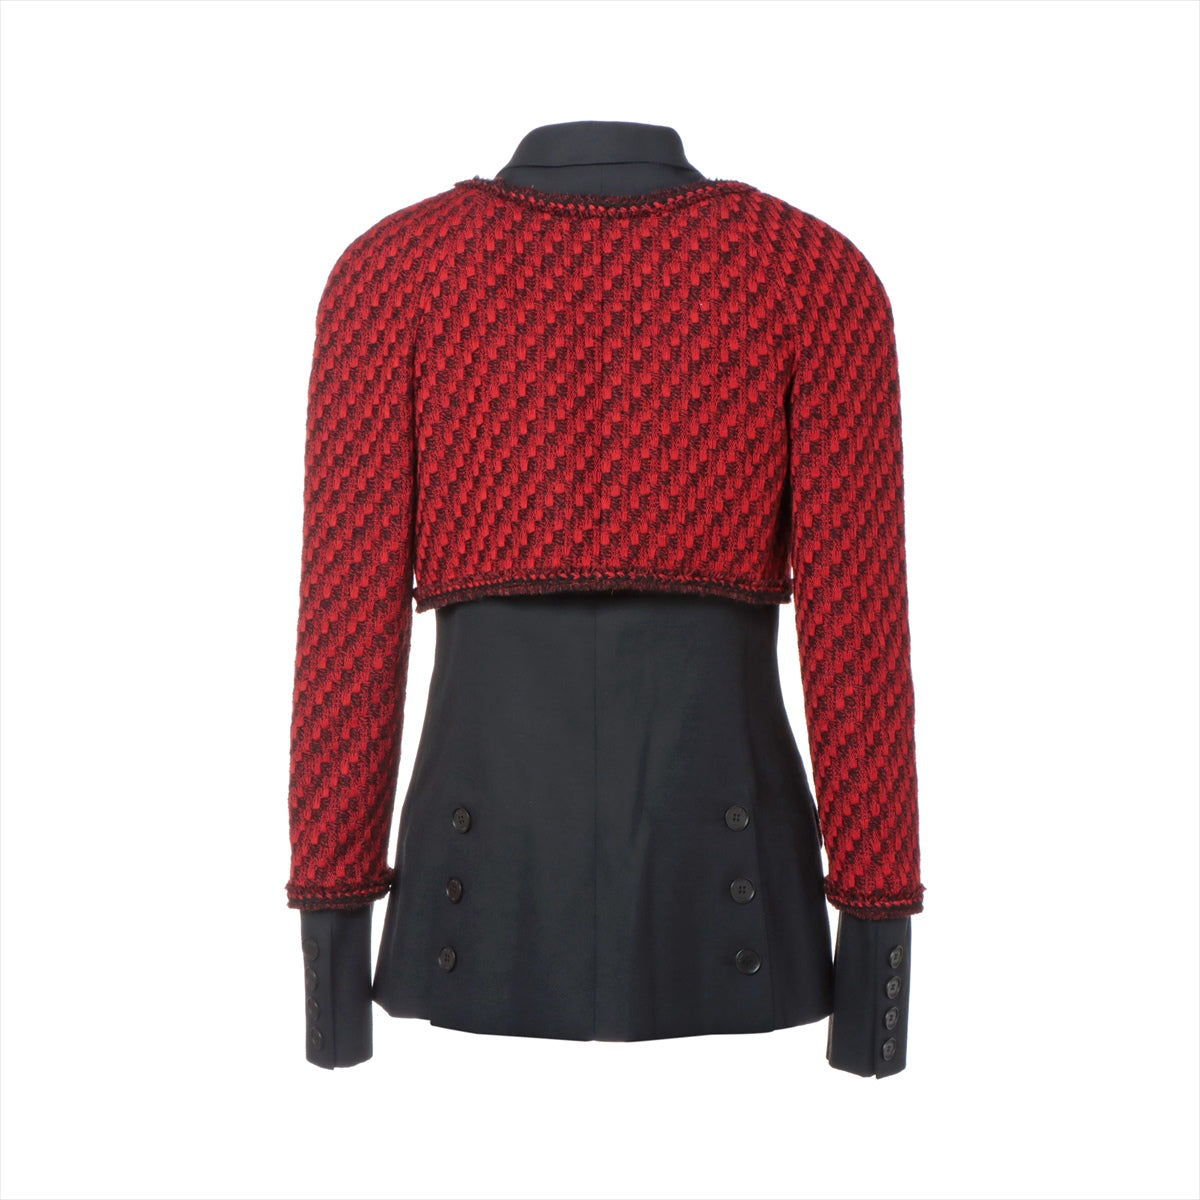 Chanel P42 Wool & silk Jacket 36 Ladies' Red x Black  P42241W04973 Gripore button